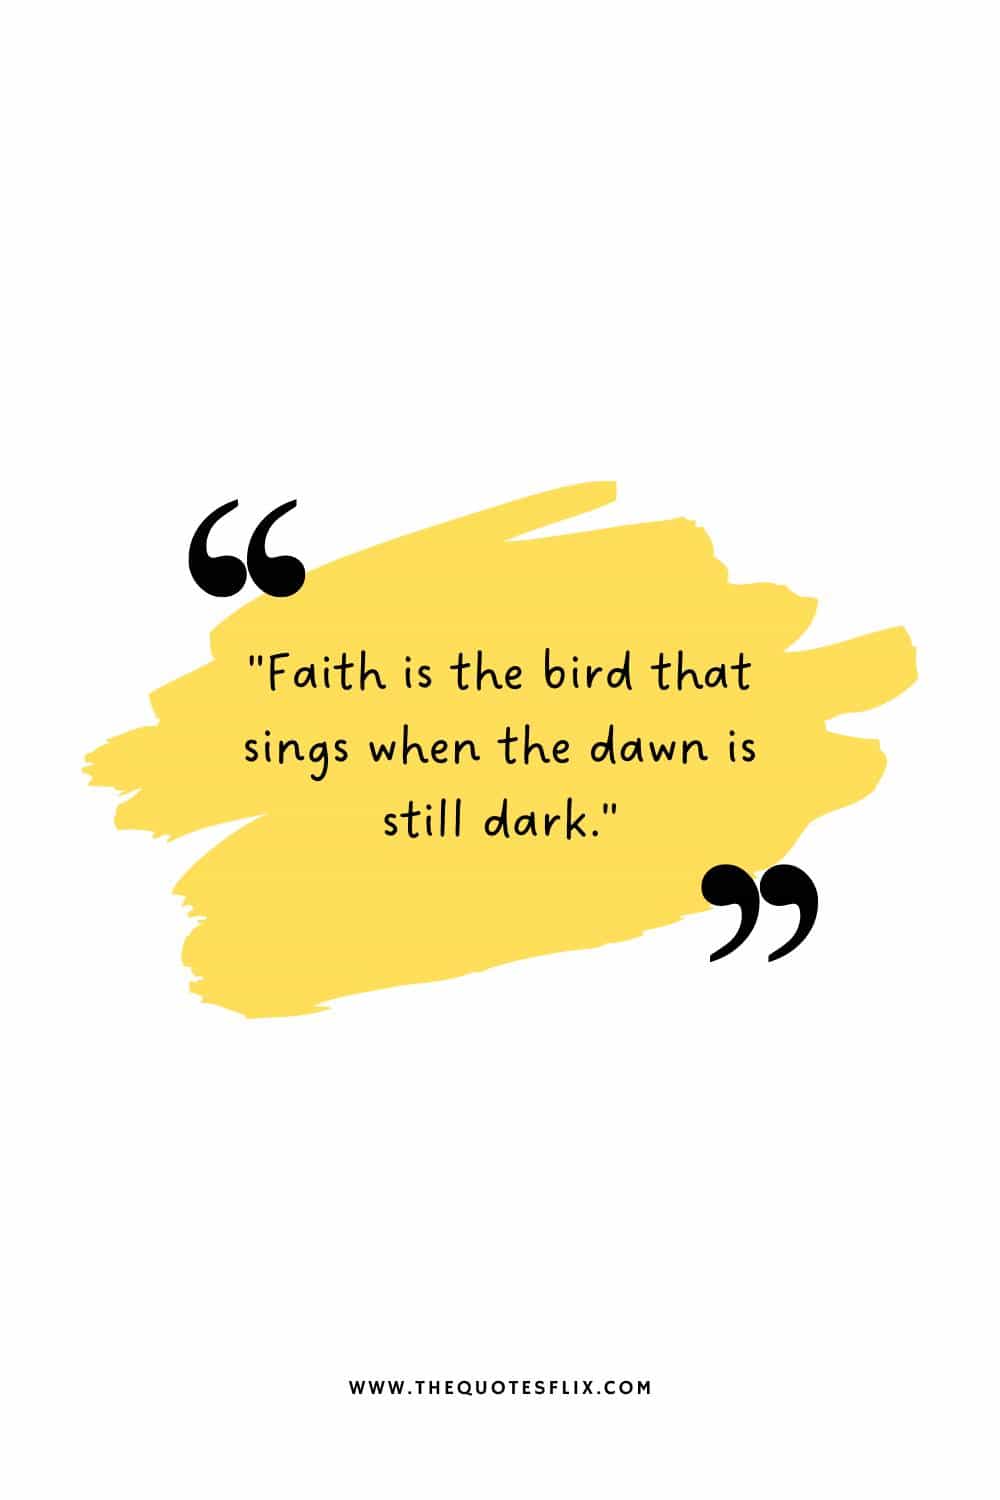 cancer survivor quotes - faith in the bird sings when still dark